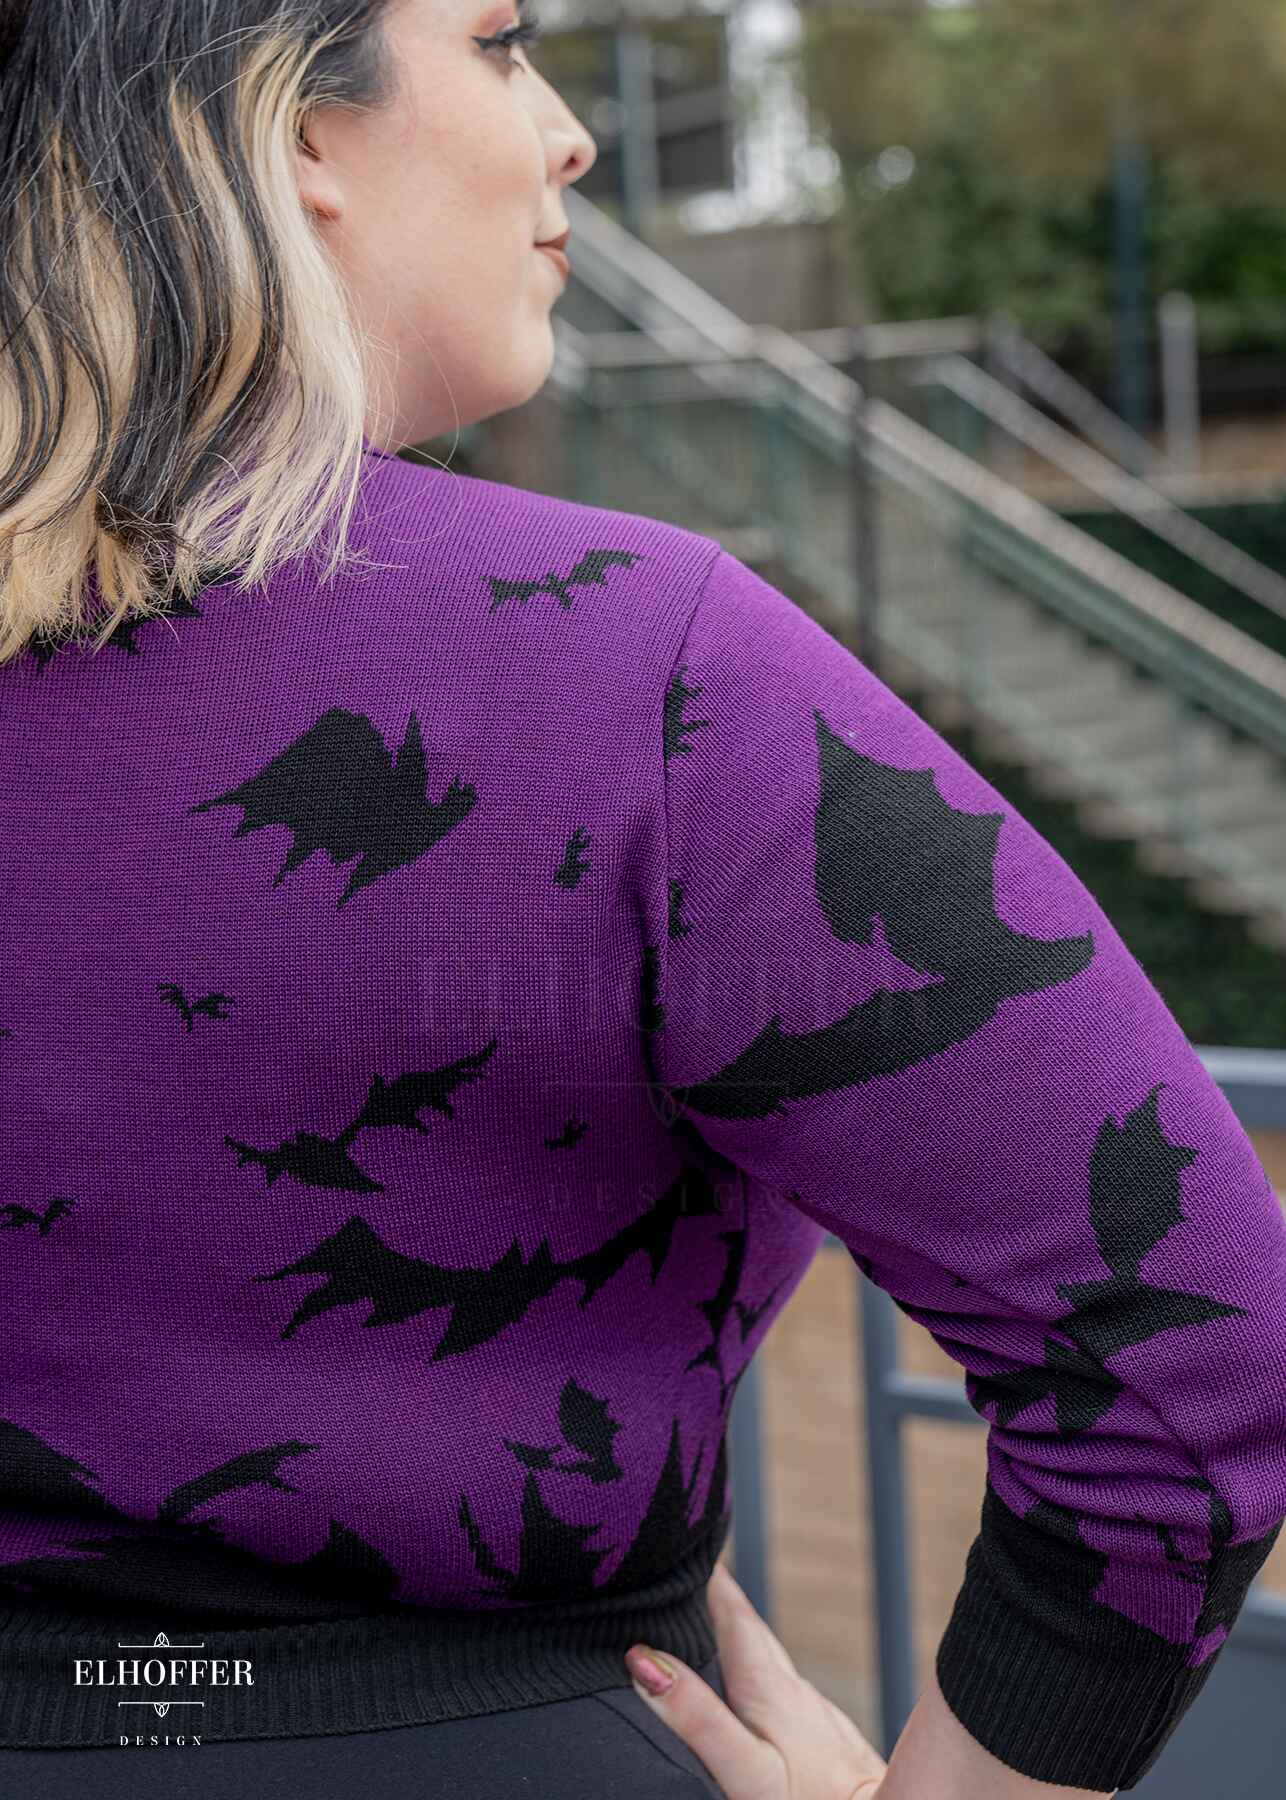 Close up of black bat design on purple sweater